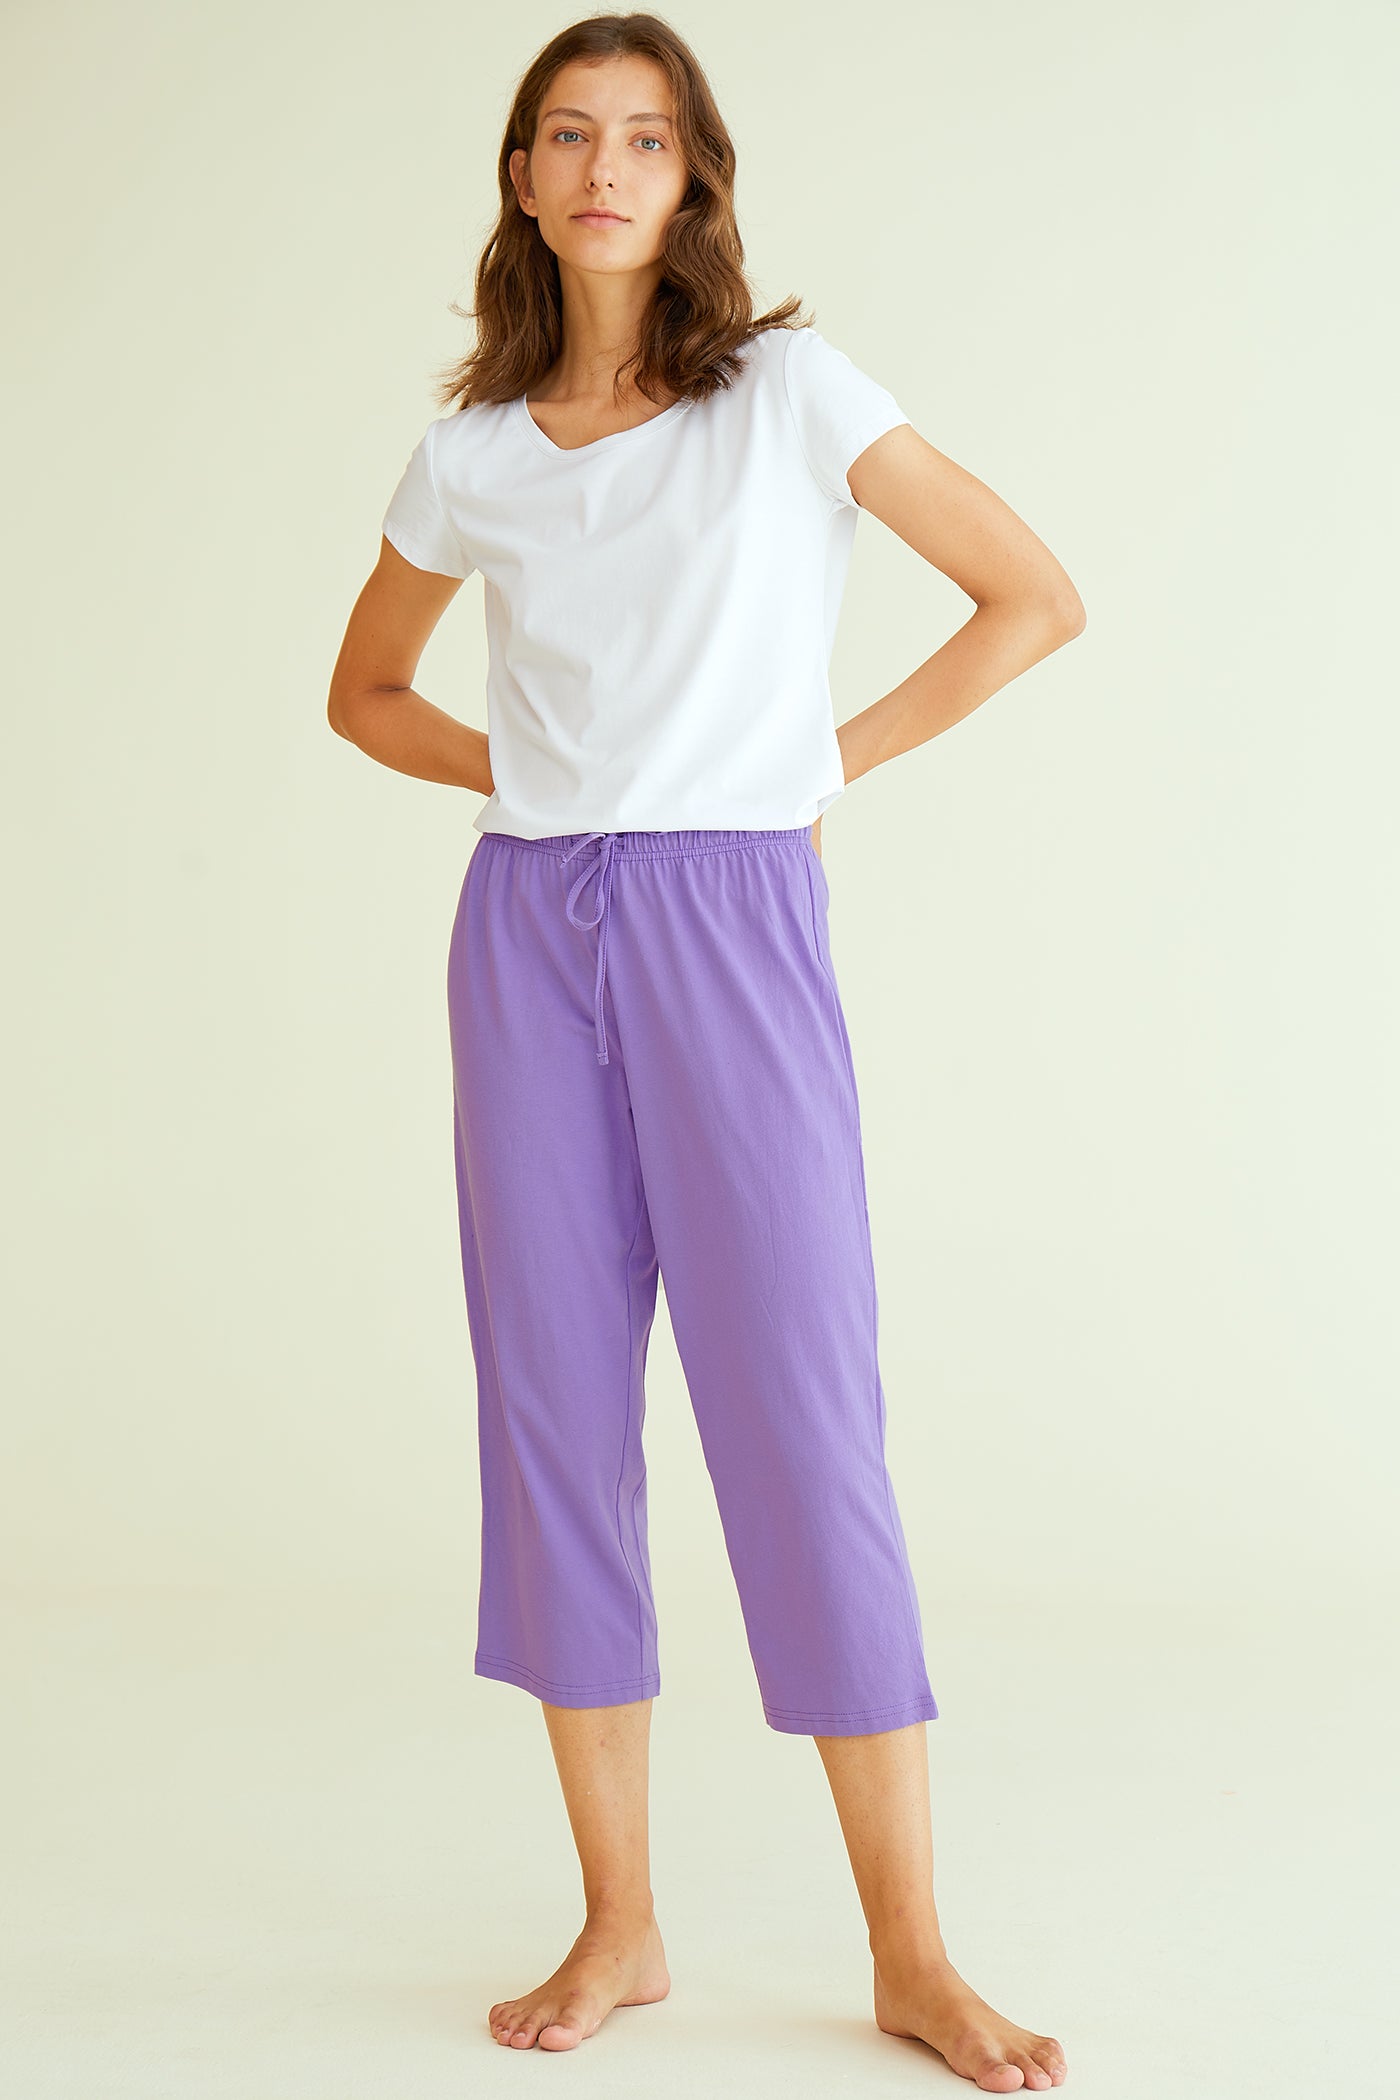 Women's Cotton Capri Pants Sleep Capris